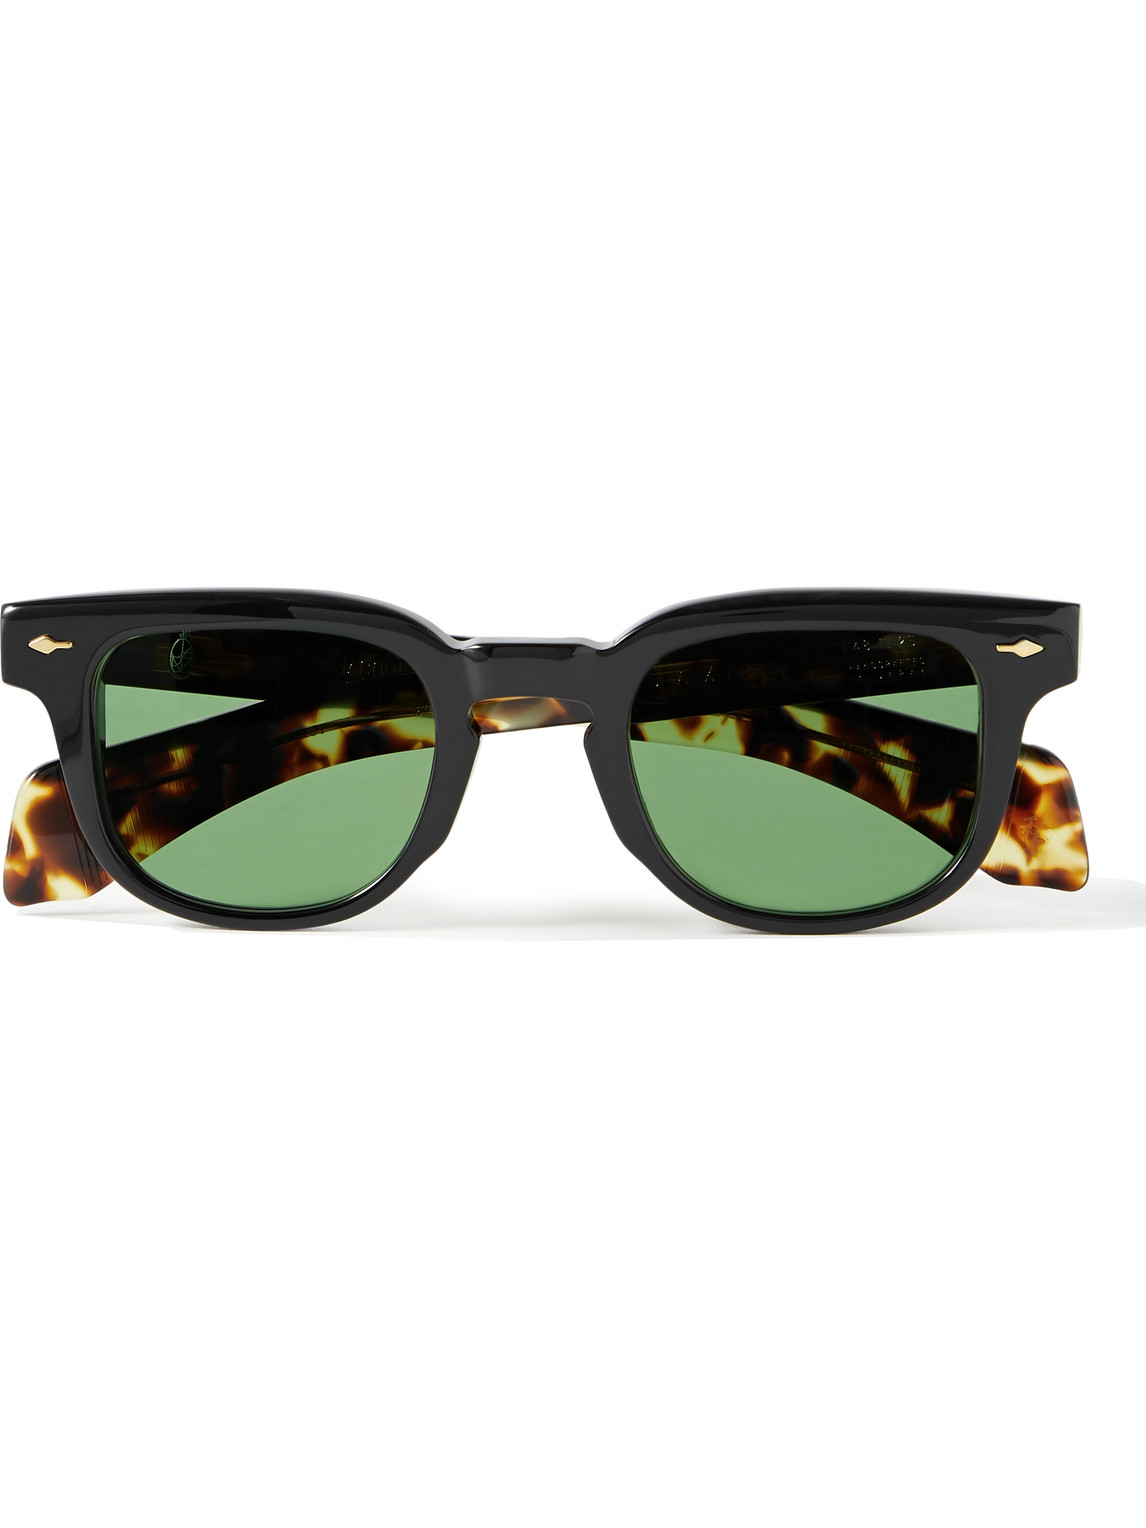 Jacques Marie Mage Jax D-frame Acetate Sunglasses In Black